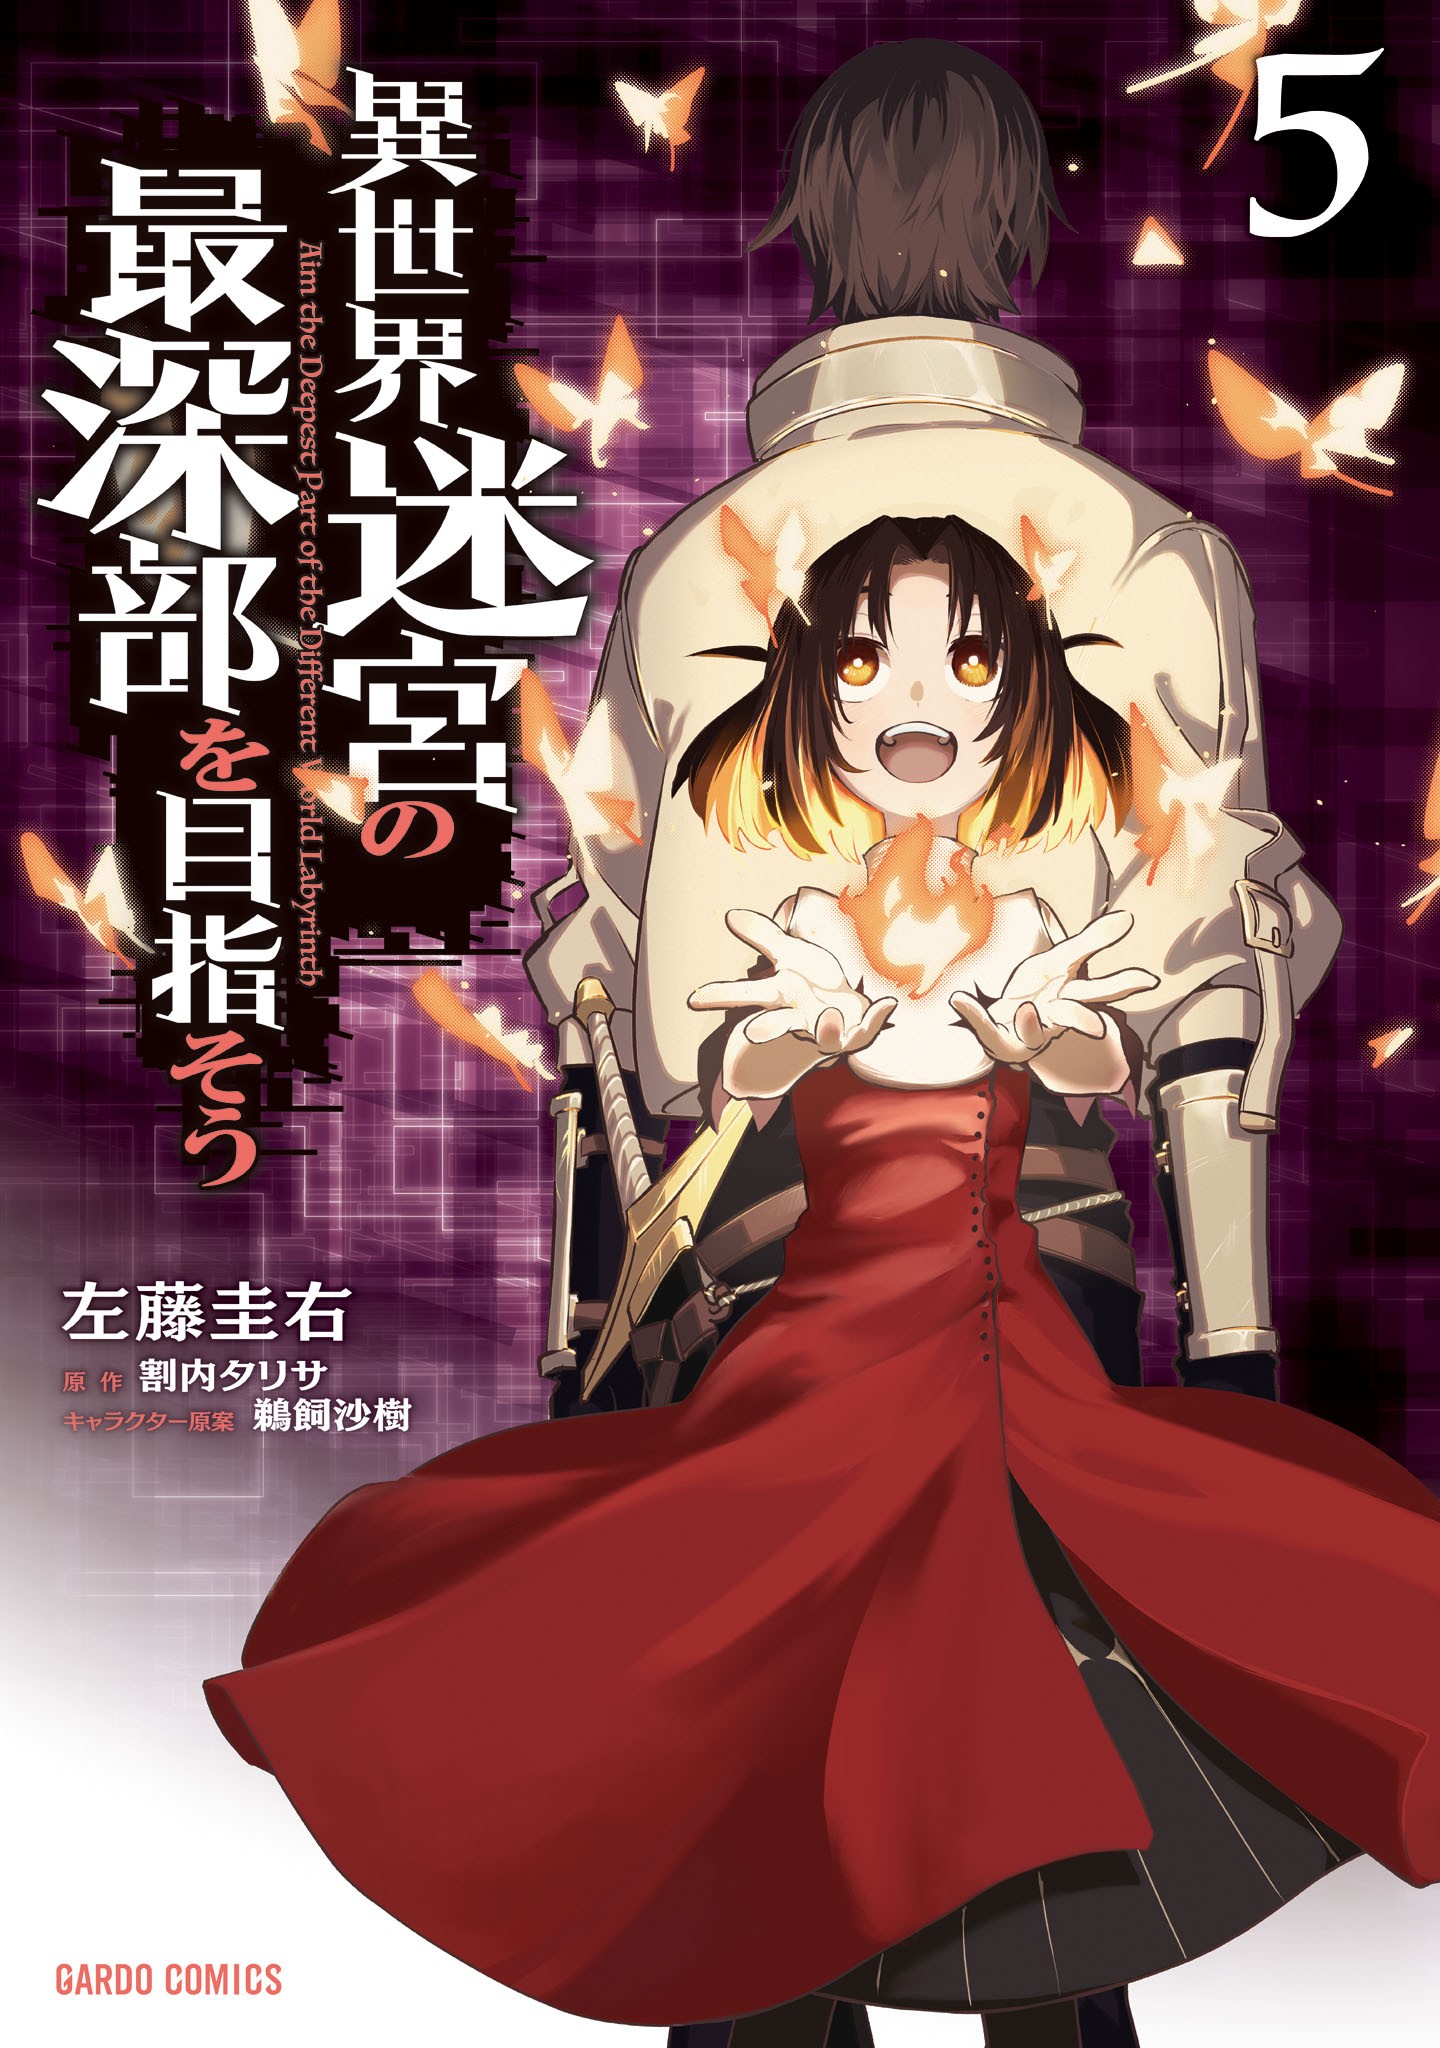 Isekai Meikyuu de Harem Light Novel Getting Anime Adaptation